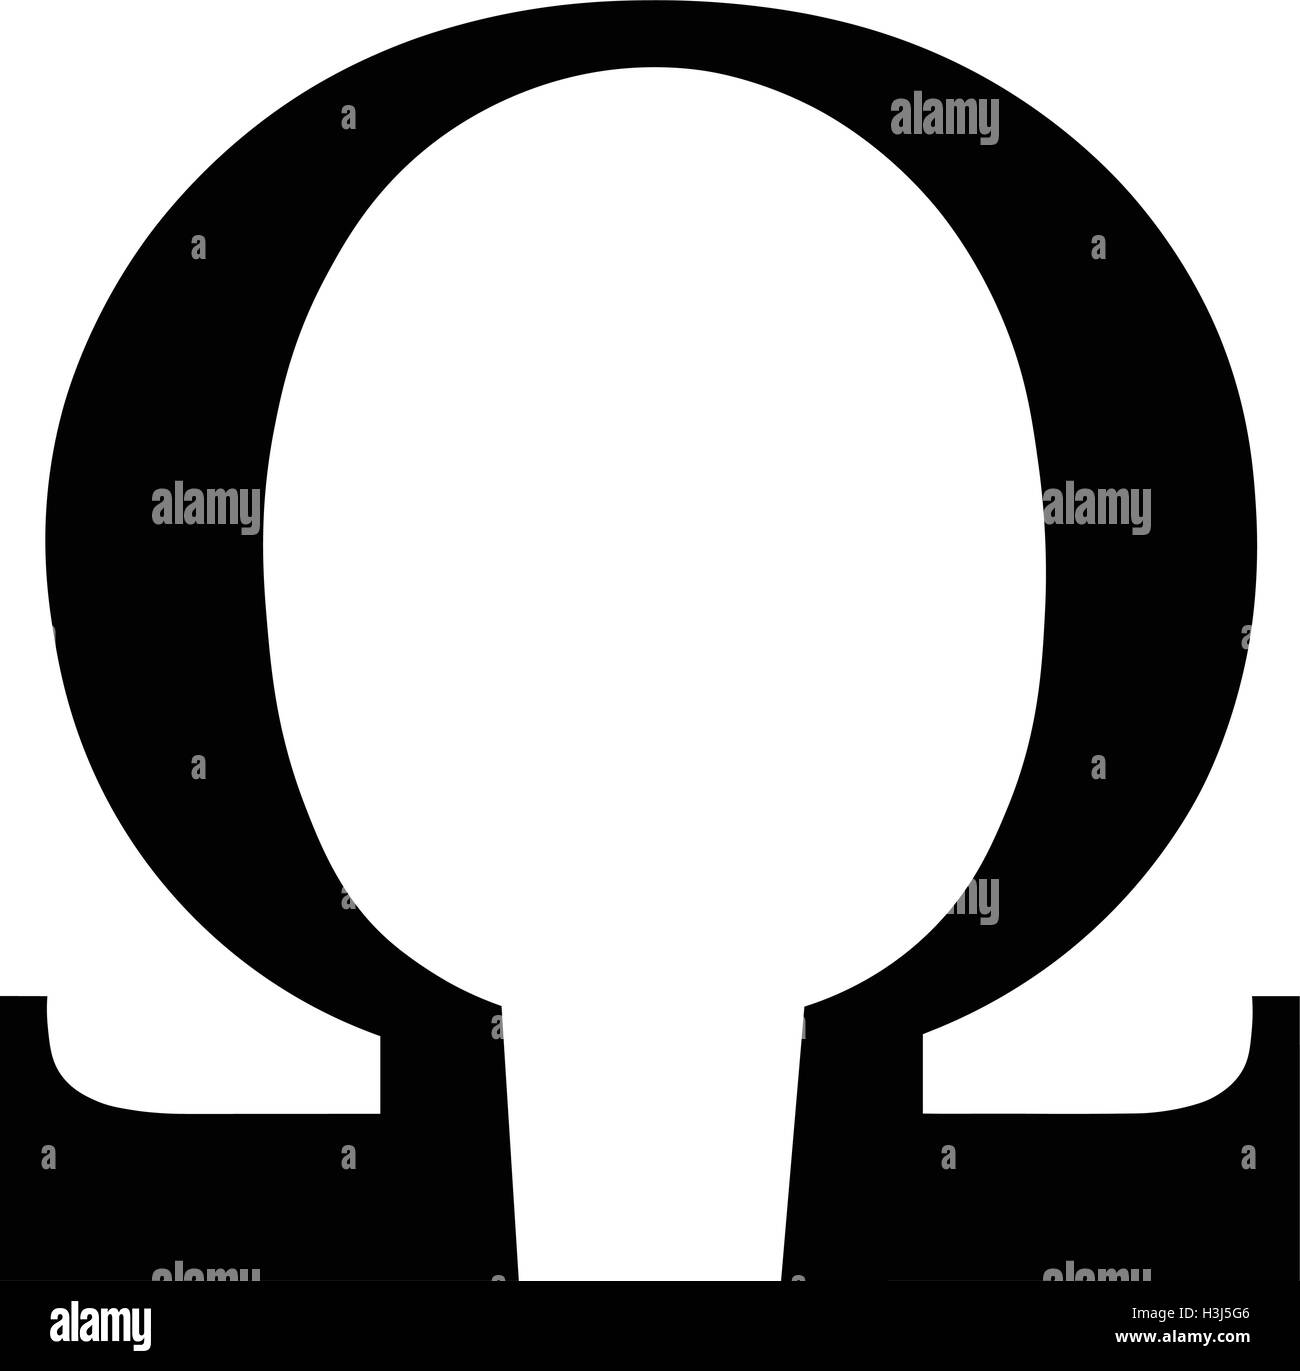 Omega greek letter icon, Omega symbol, black vector illustration. Stock Vector